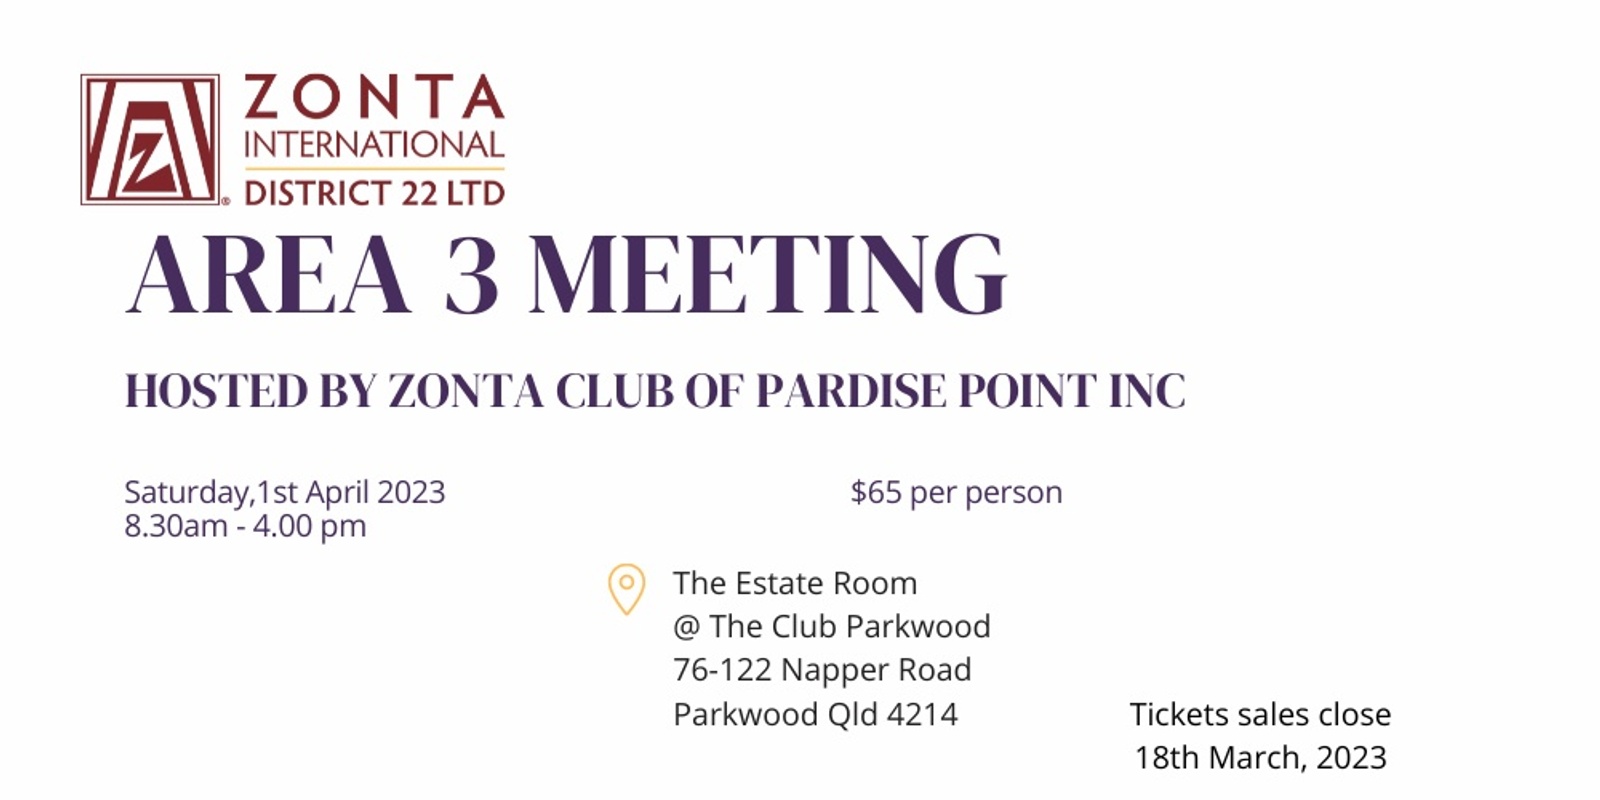 Zonta District 22 - Area 3 Meeting